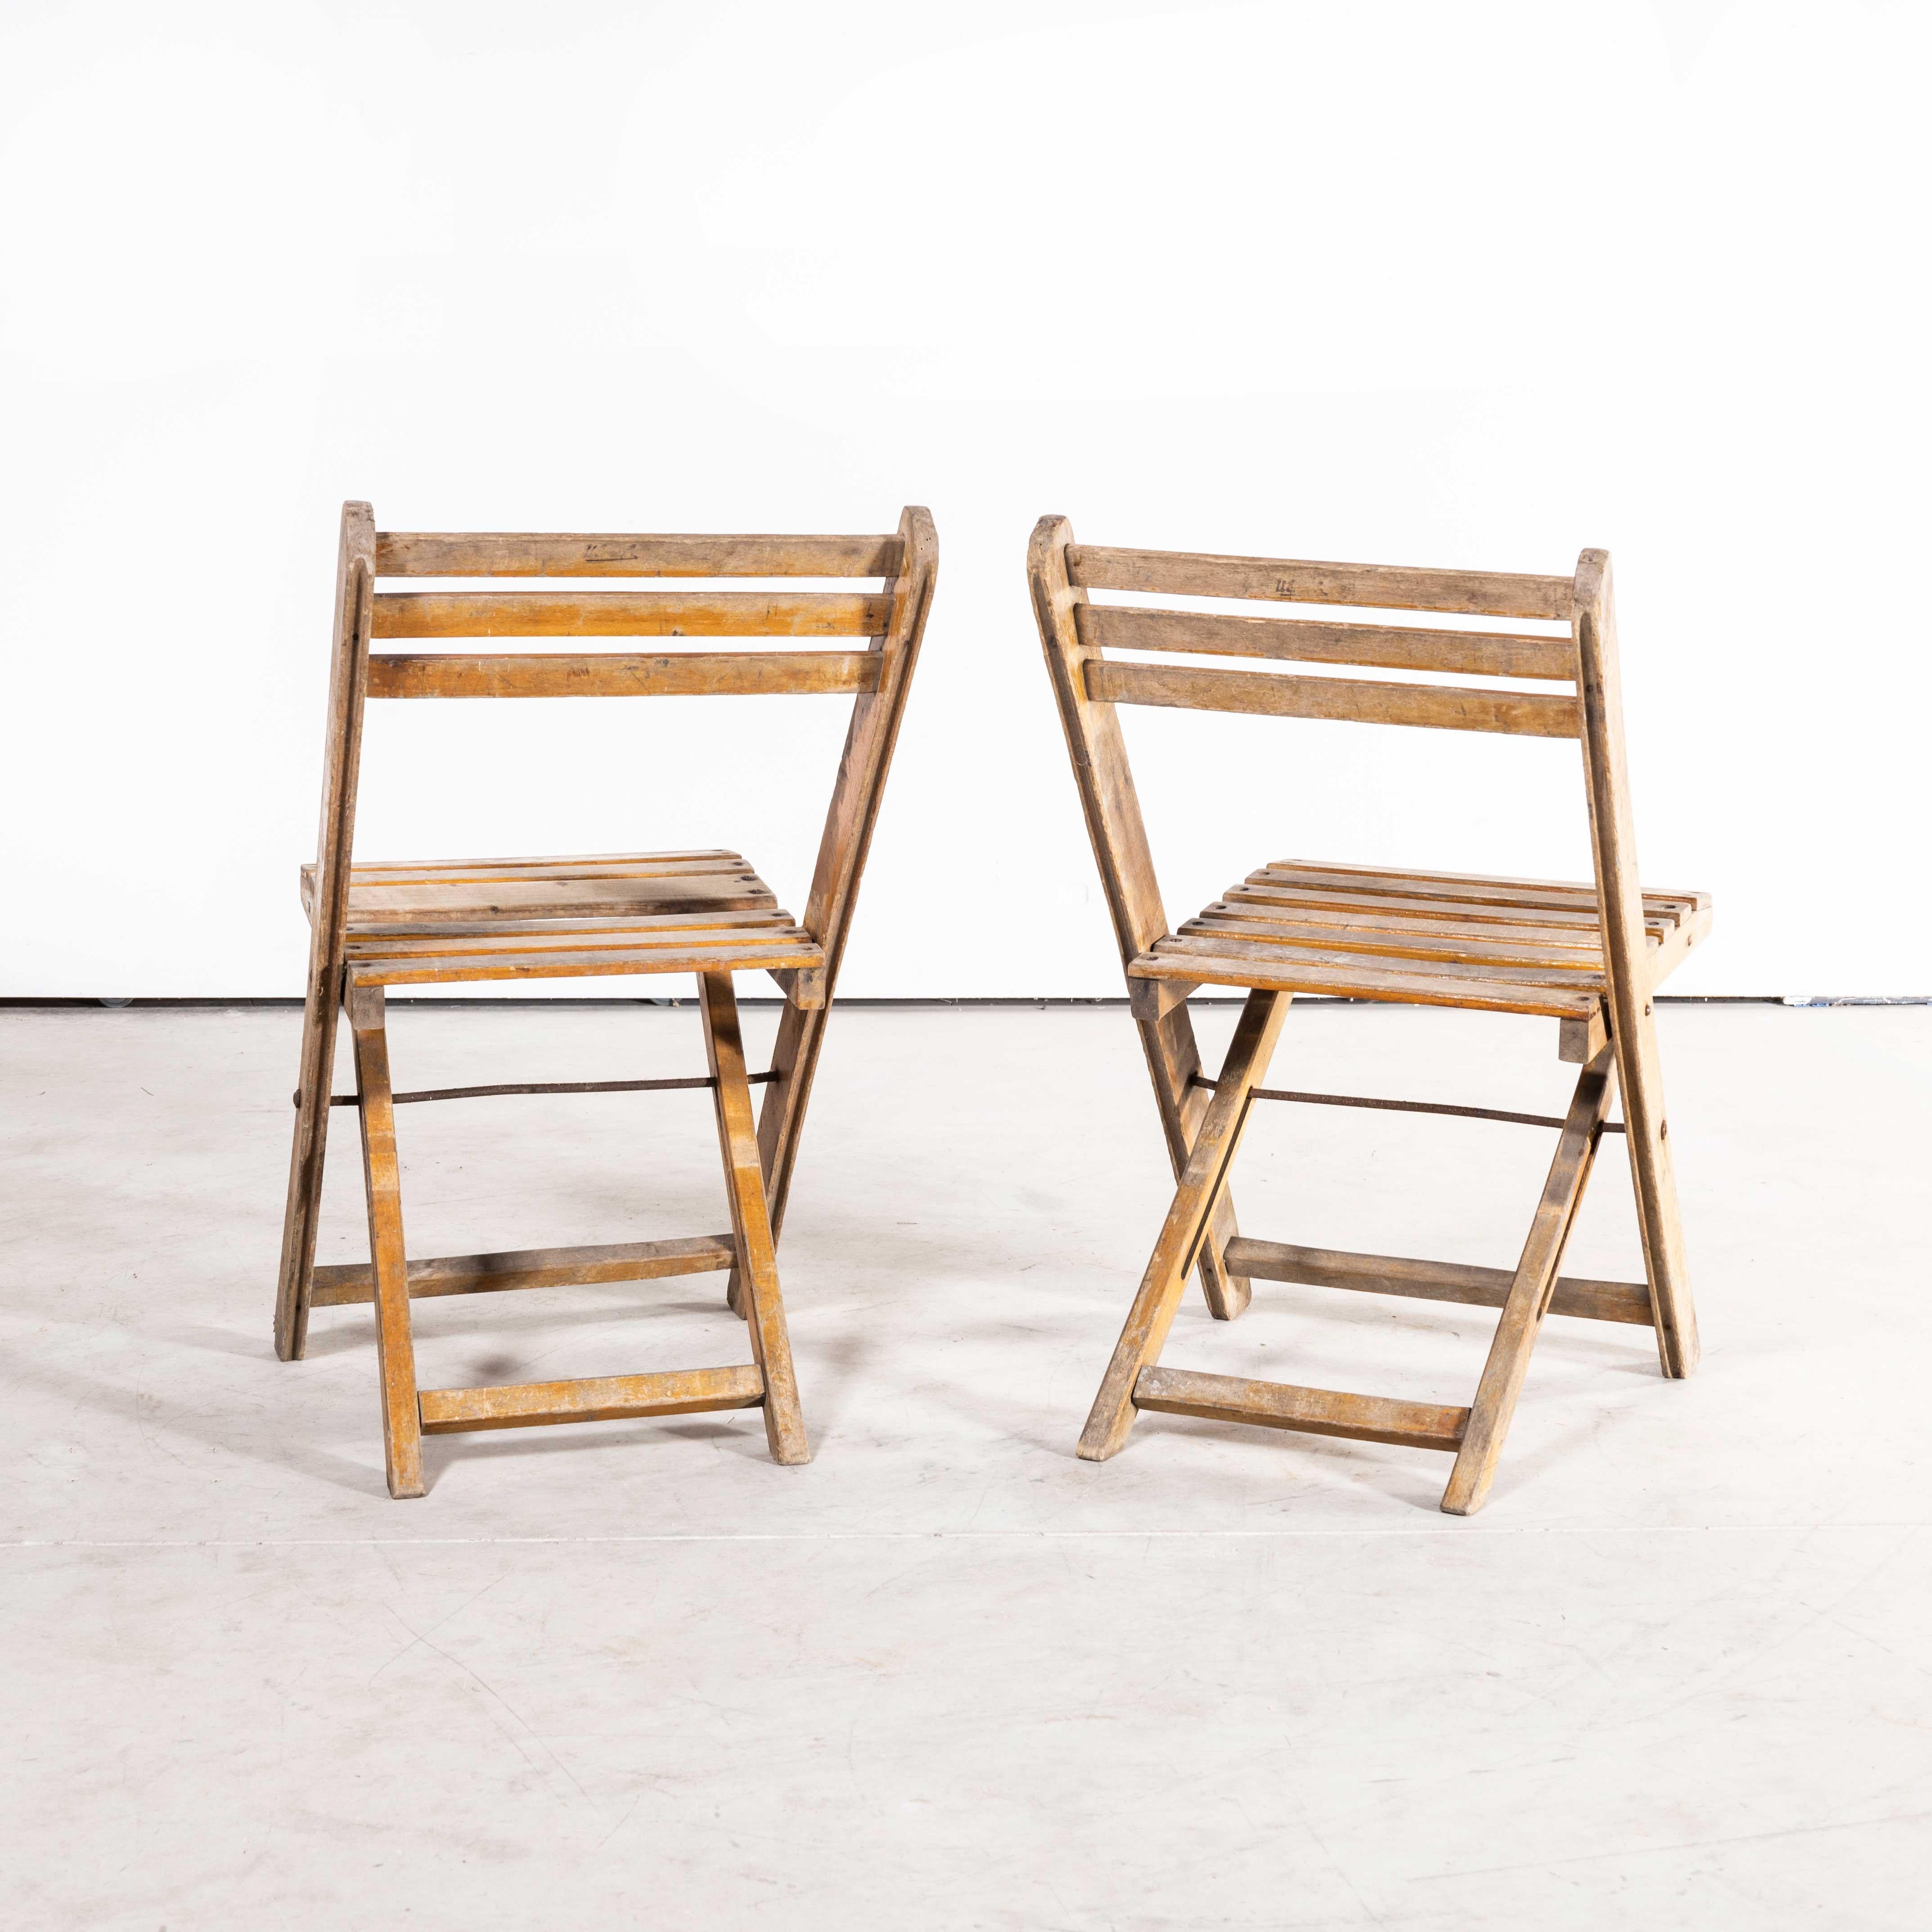 wooden folding chair plans